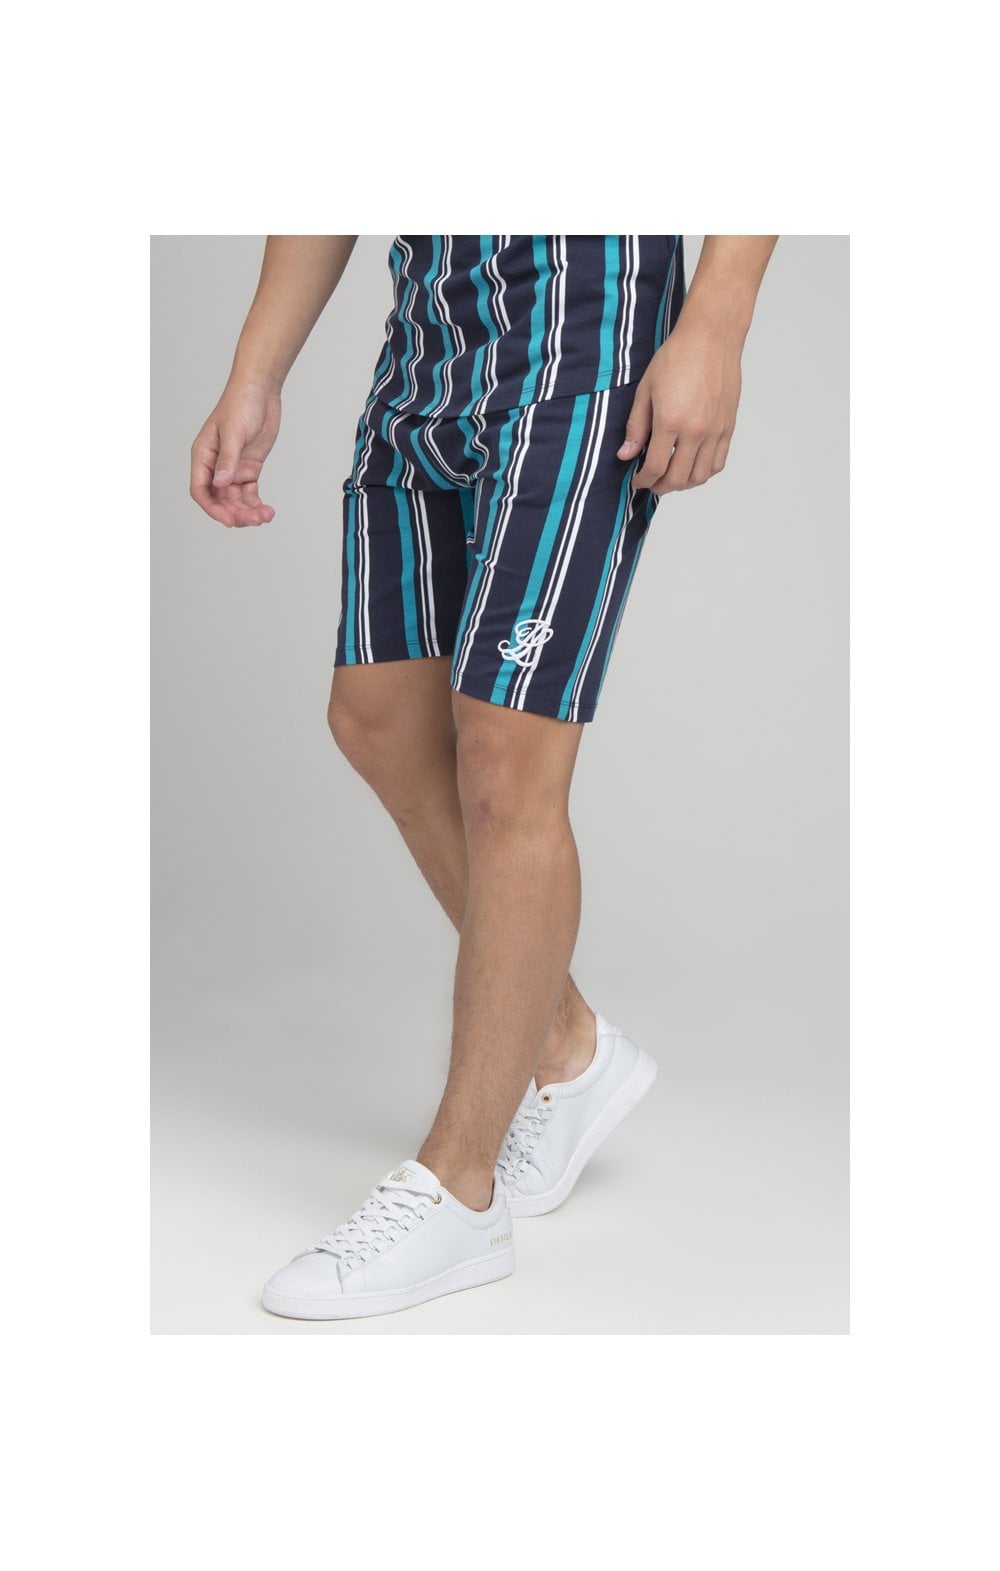 Illusive London Stripe Shorts - Navy & Teal